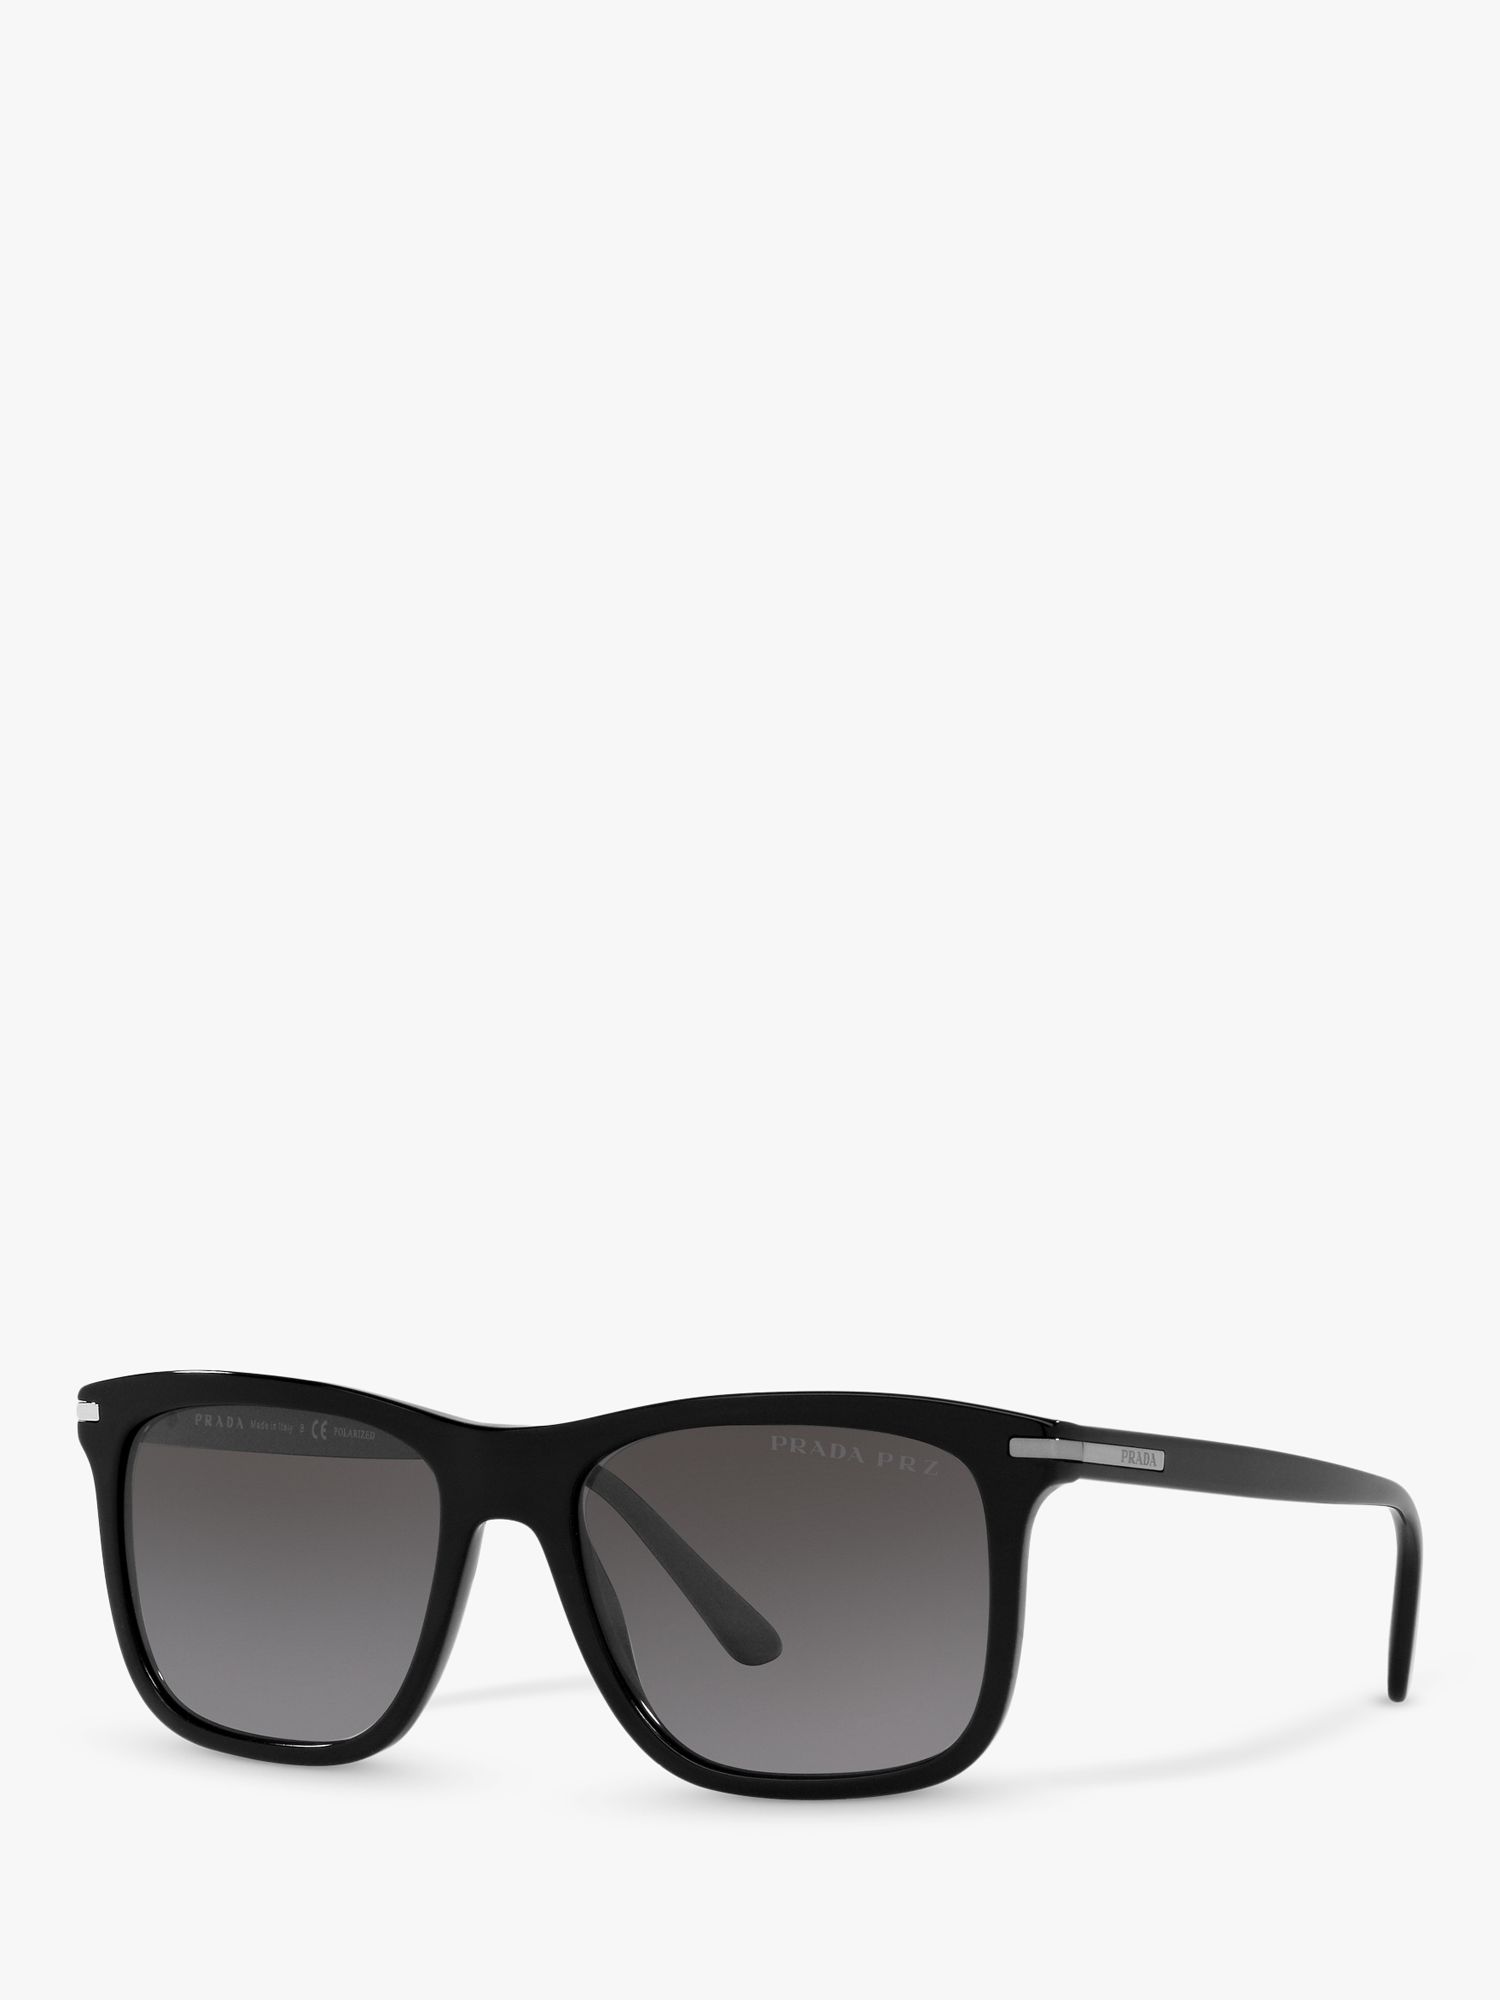 Prada PR 18WS Men's Rectangular Polarised Sunglasses, Black/Grey Gradient  at John Lewis & Partners